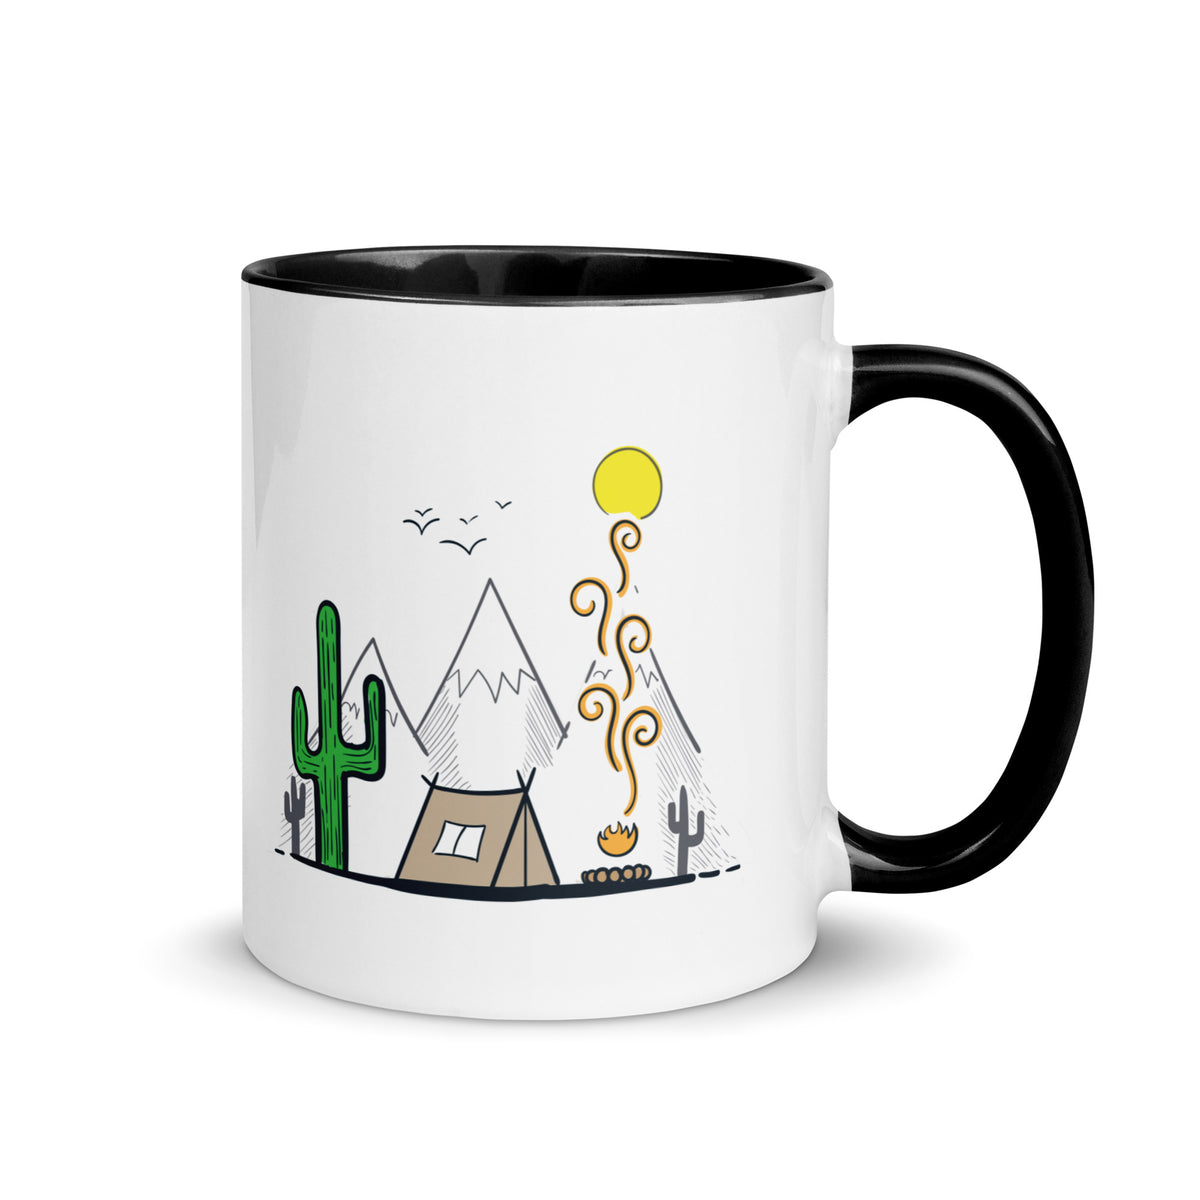 Camping Enthusiast Ceramic Mug with Outdoor Design